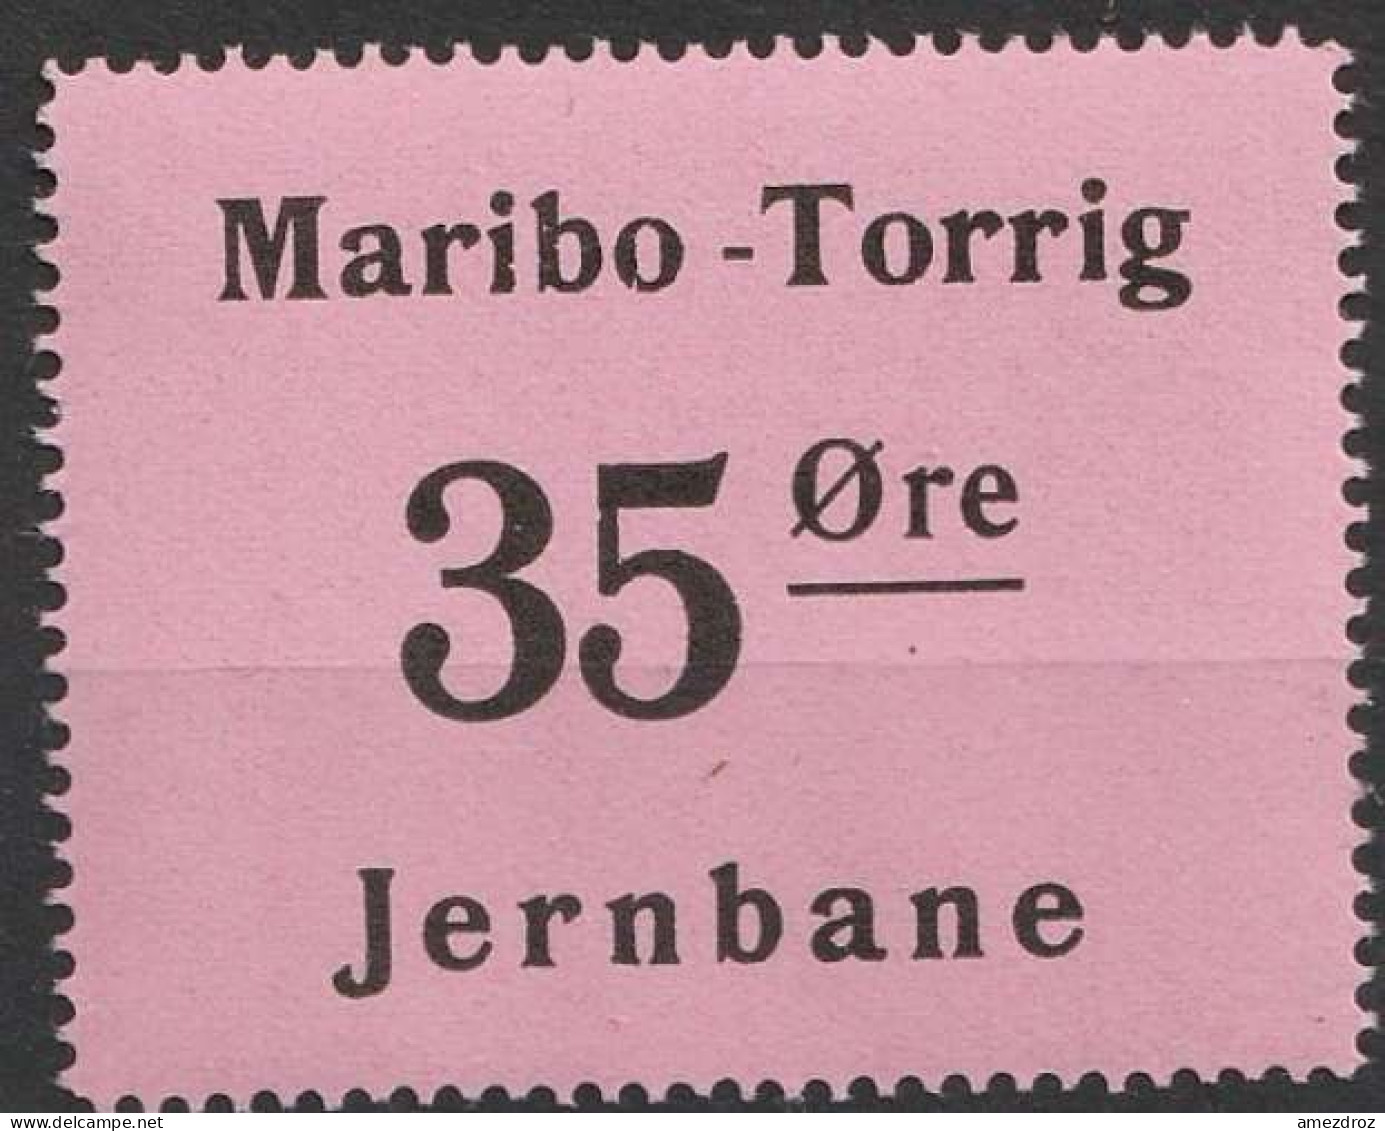 Chemin De Fer Danois ** - Dänemark Railway Eisenbahn Maribo - Torrig Jernbane   (A13) - Paquetes Postales